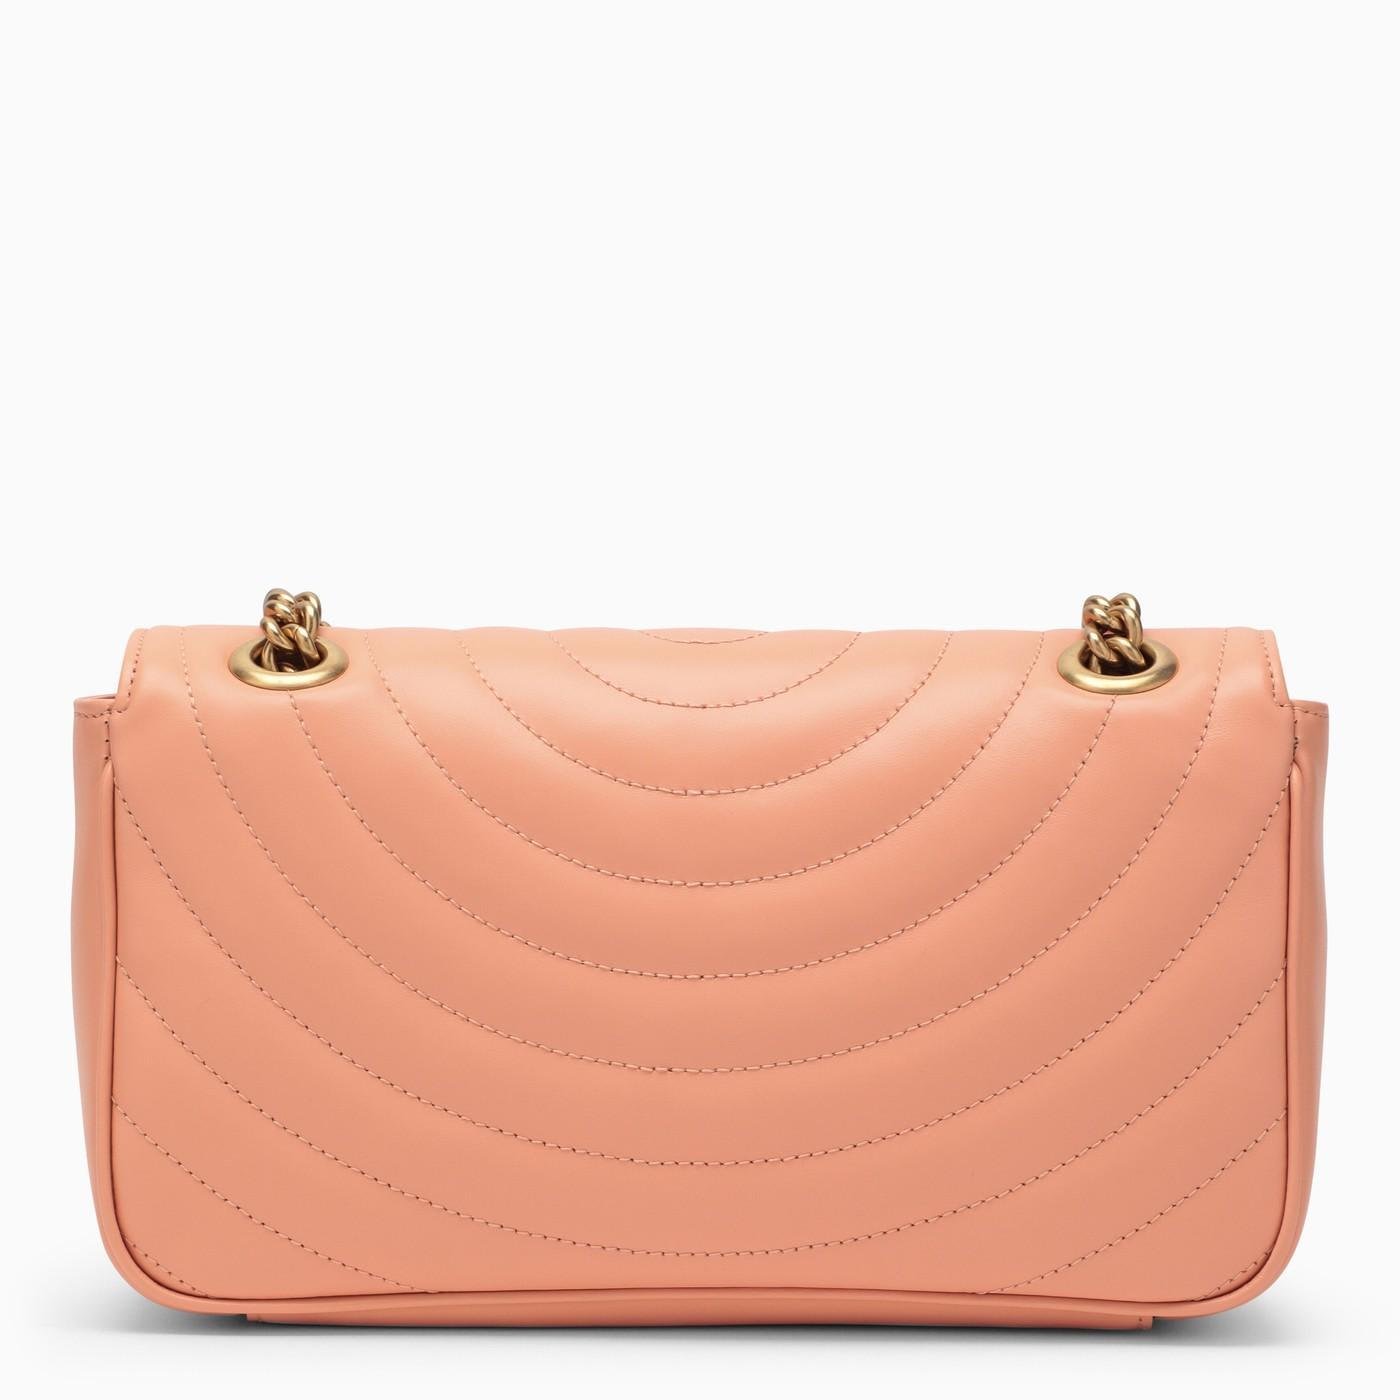 GG Matelassé mini handbag in orange leather